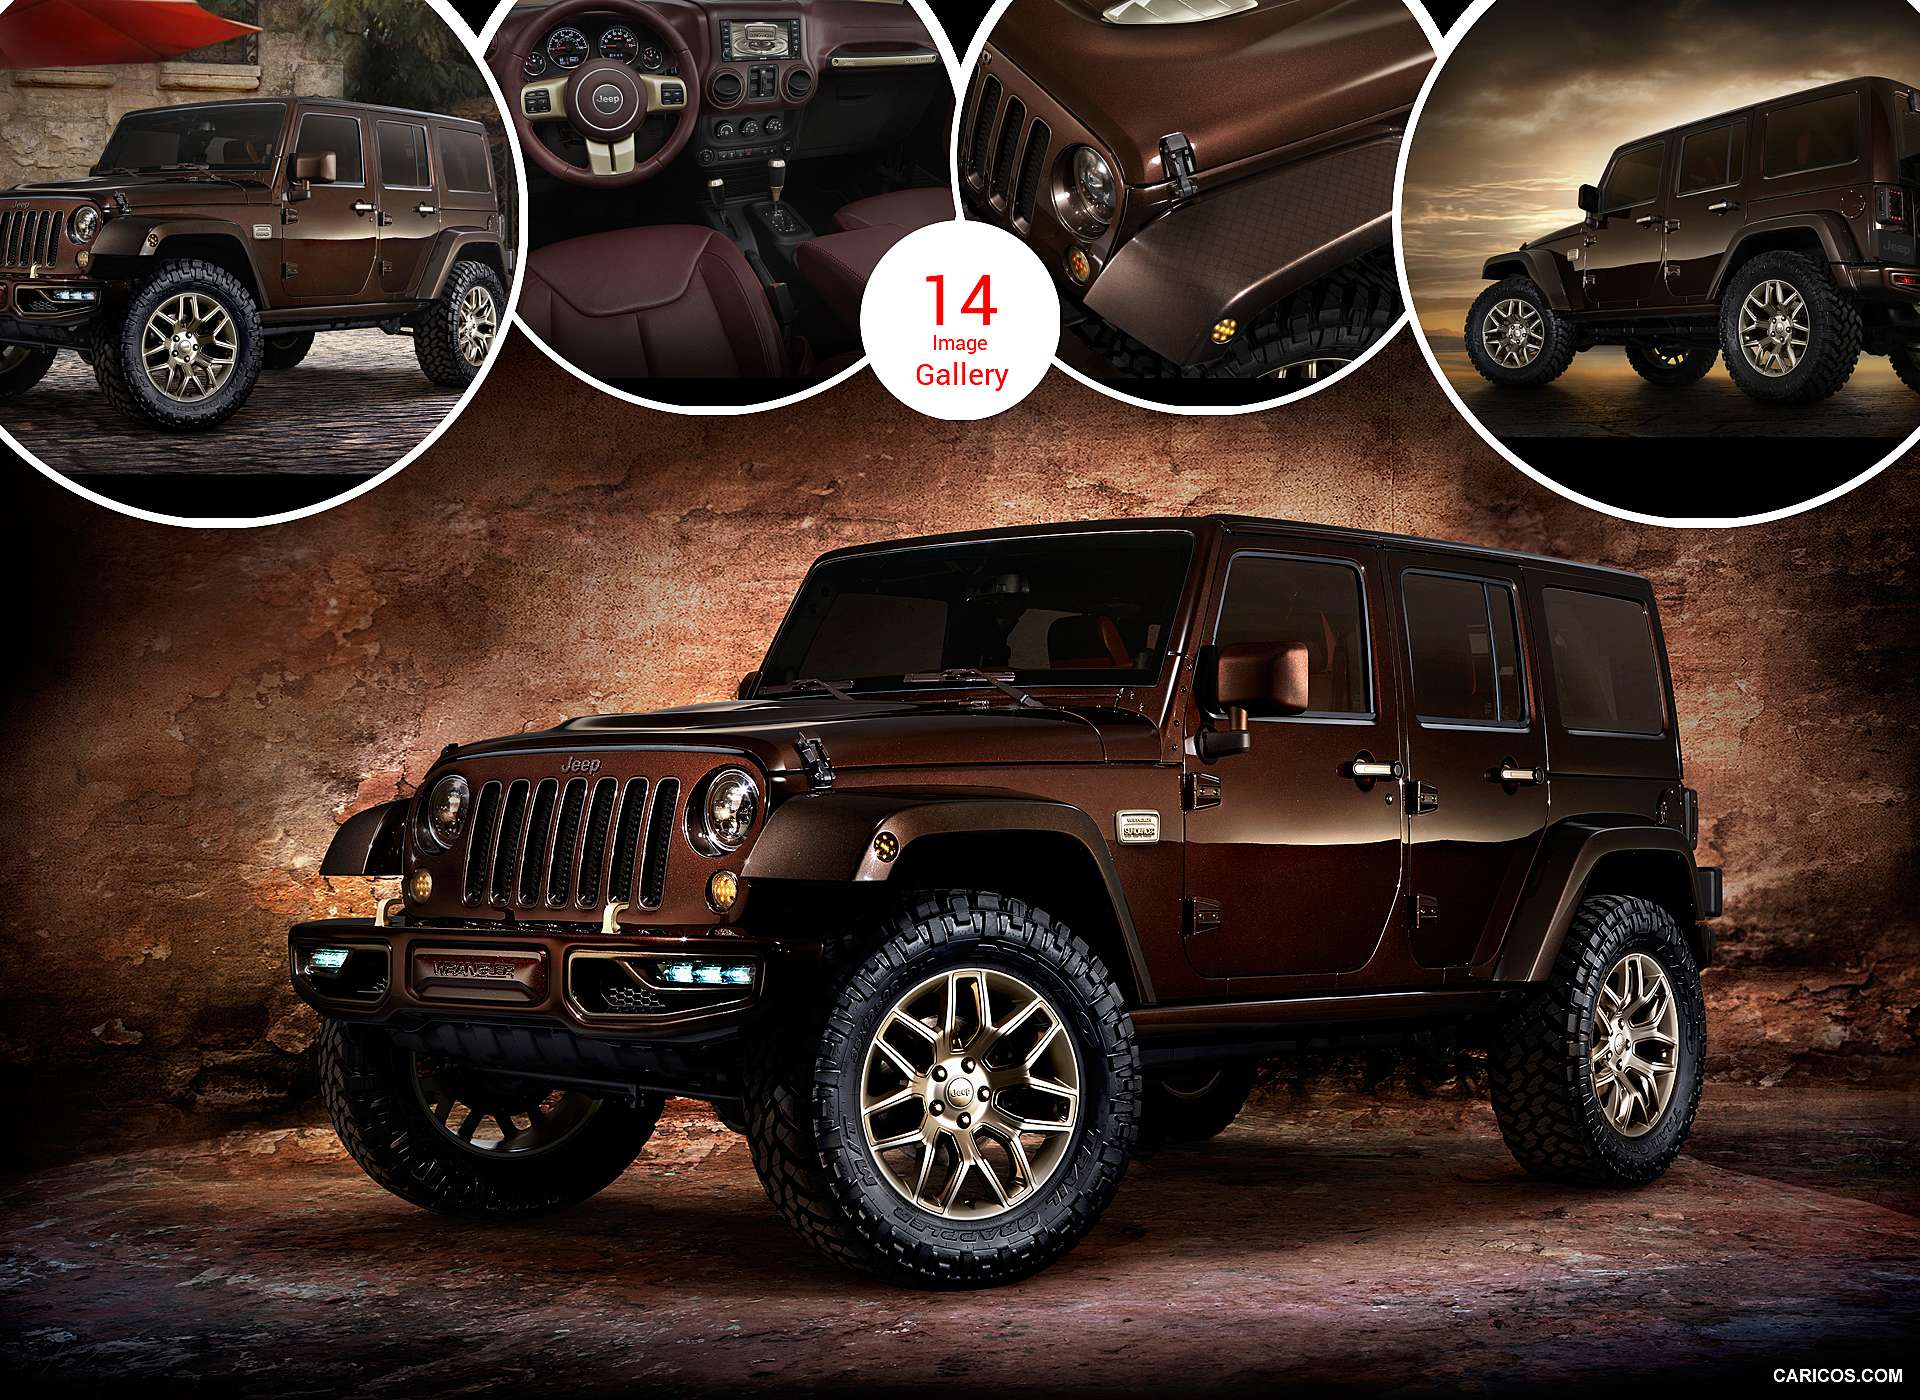 2014 Jeep Wrangler Sundancer Concept | Caricos